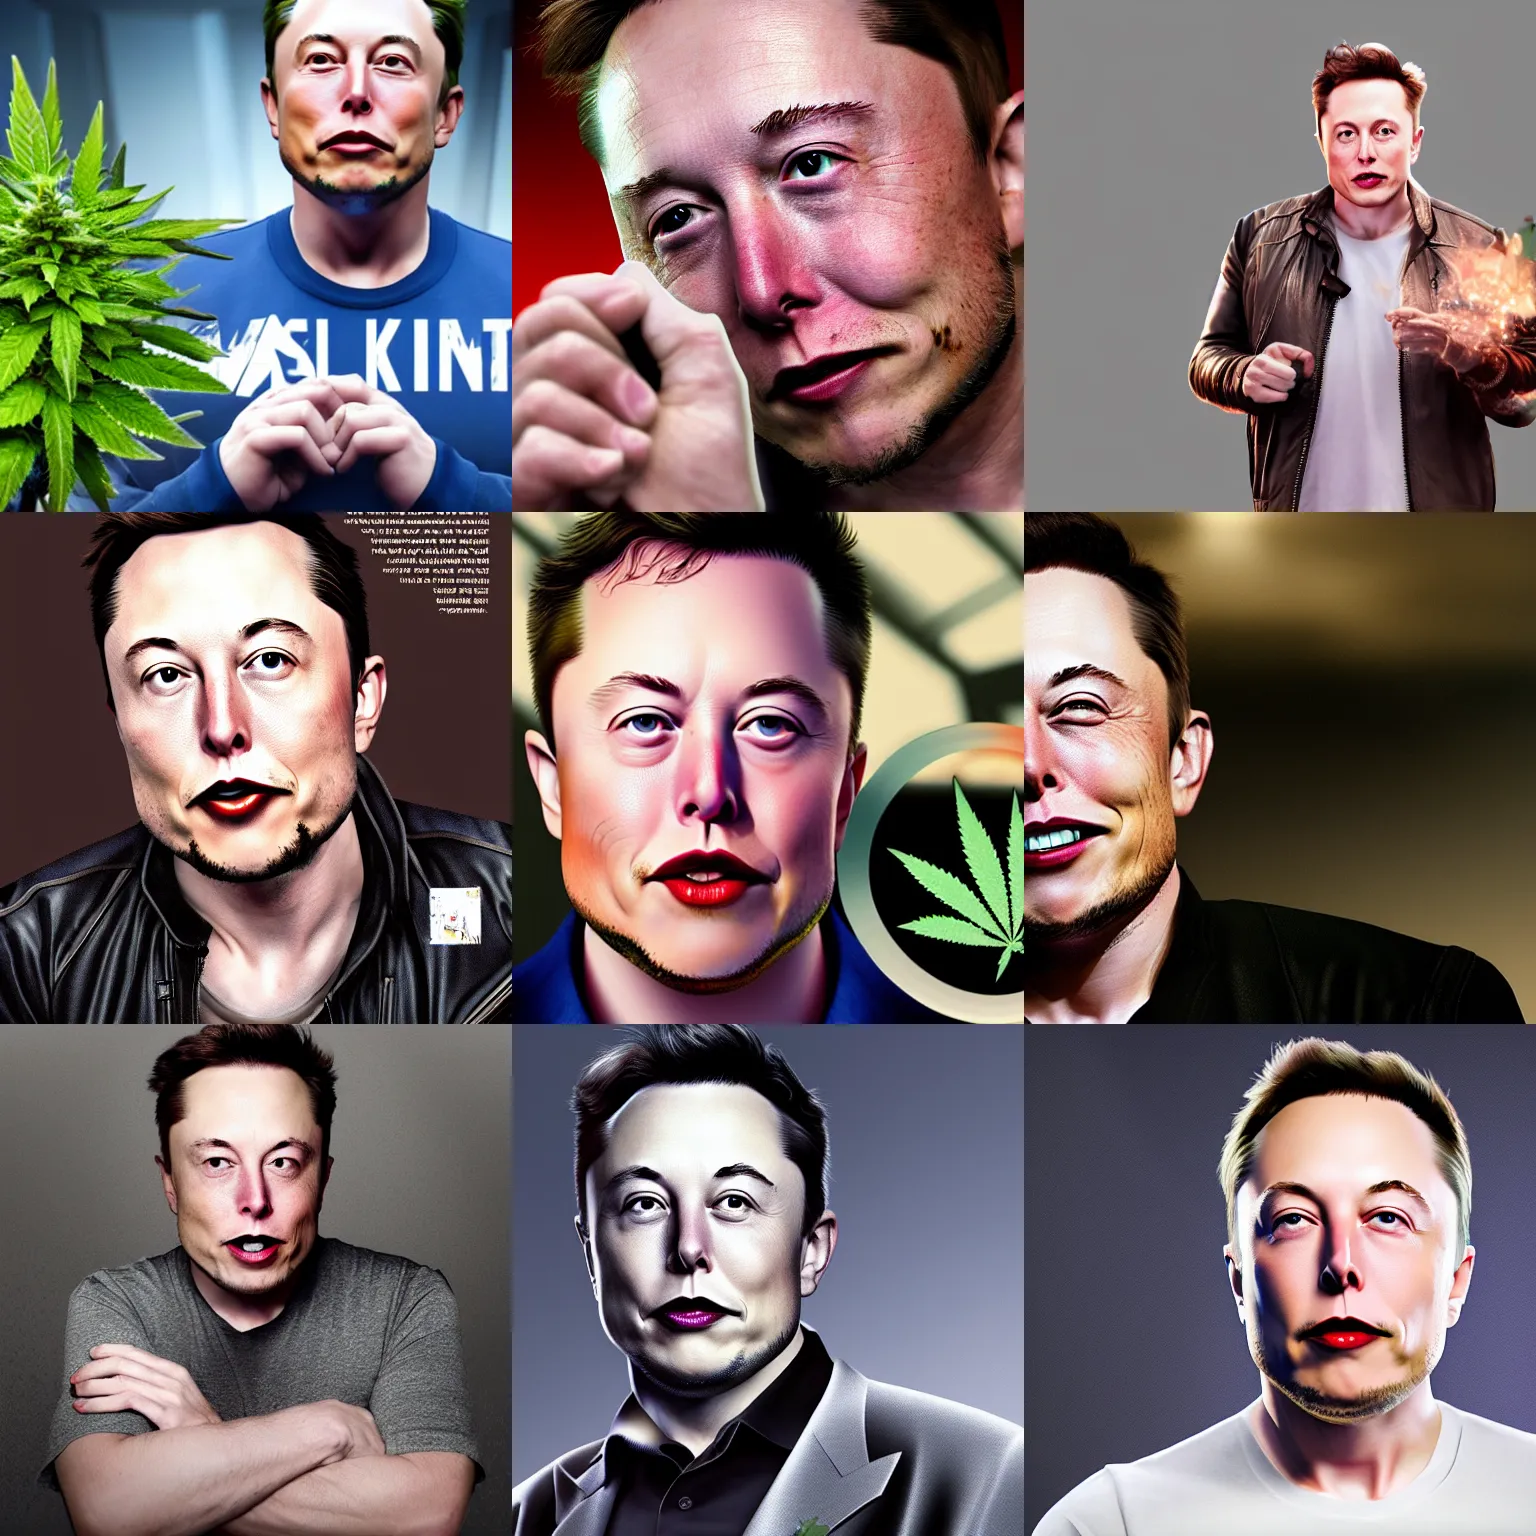 Prompt: photorealistic 8k render of Elon Musk high on weed